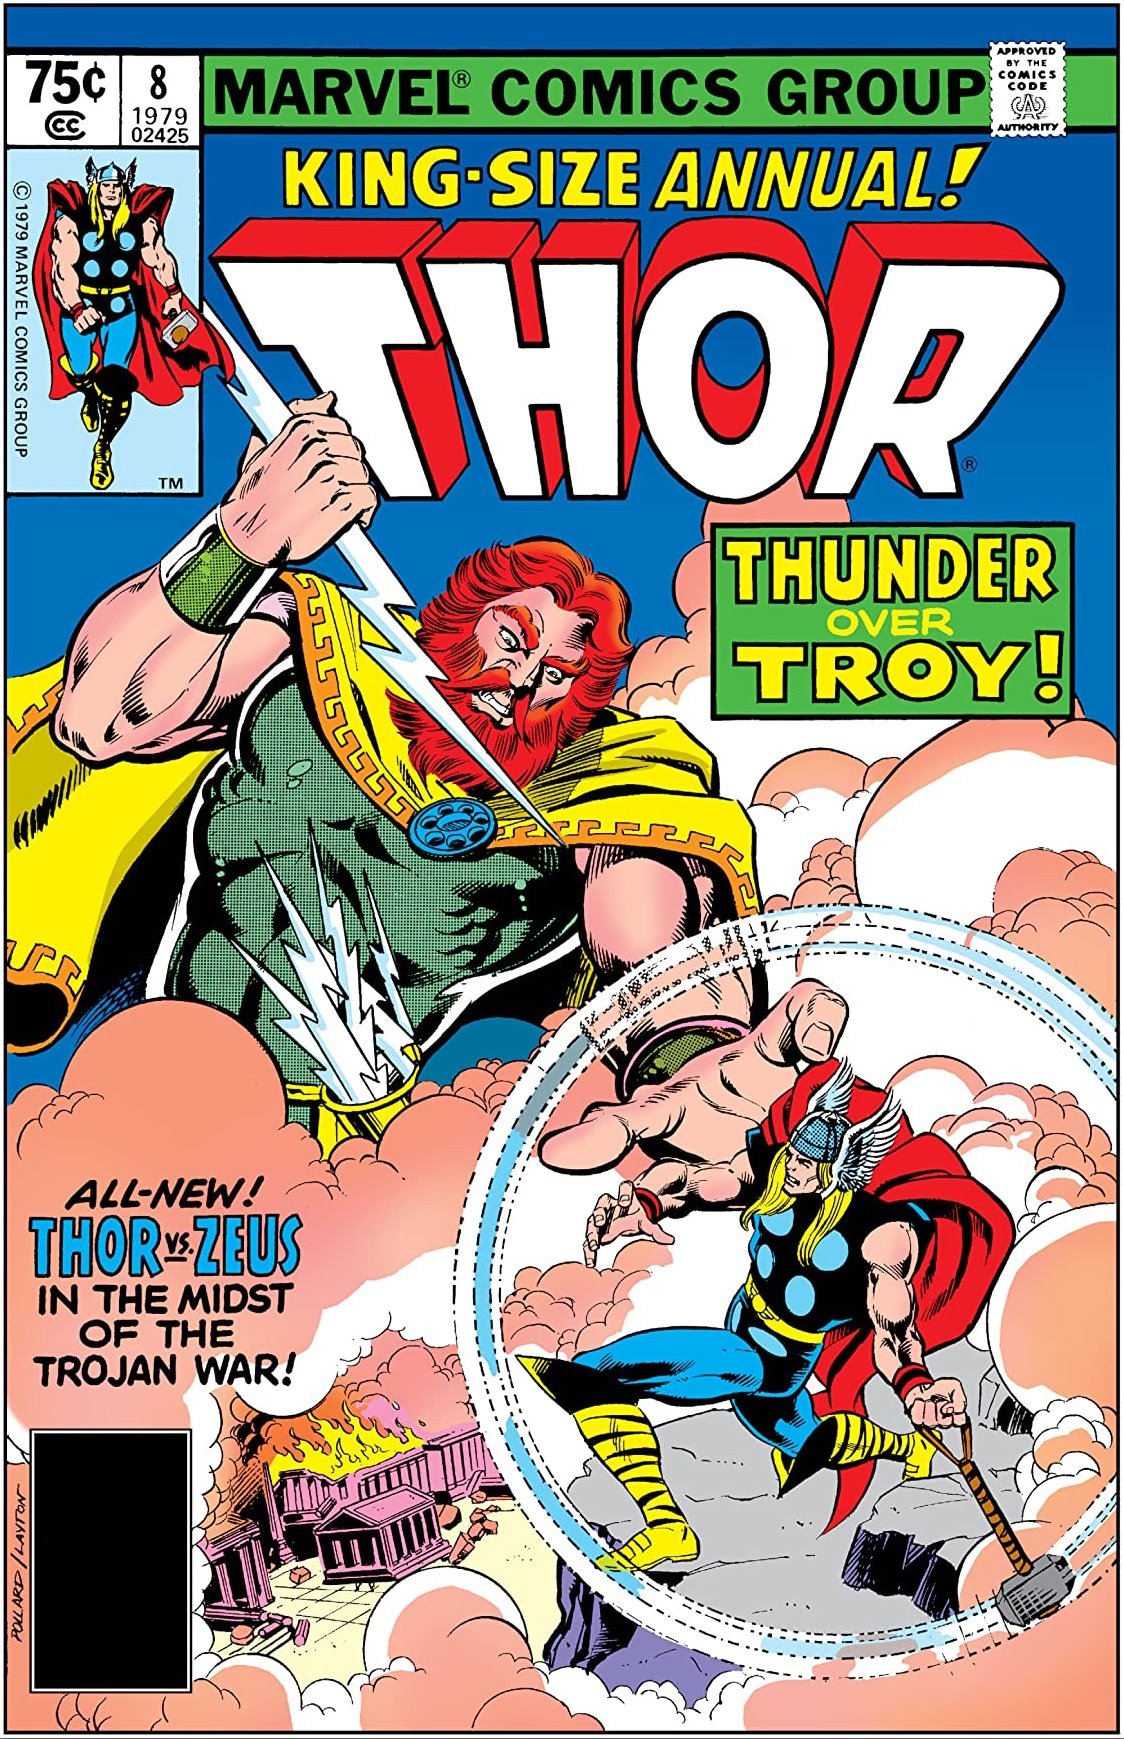 The Godly Showdown: Thor vs Zeus